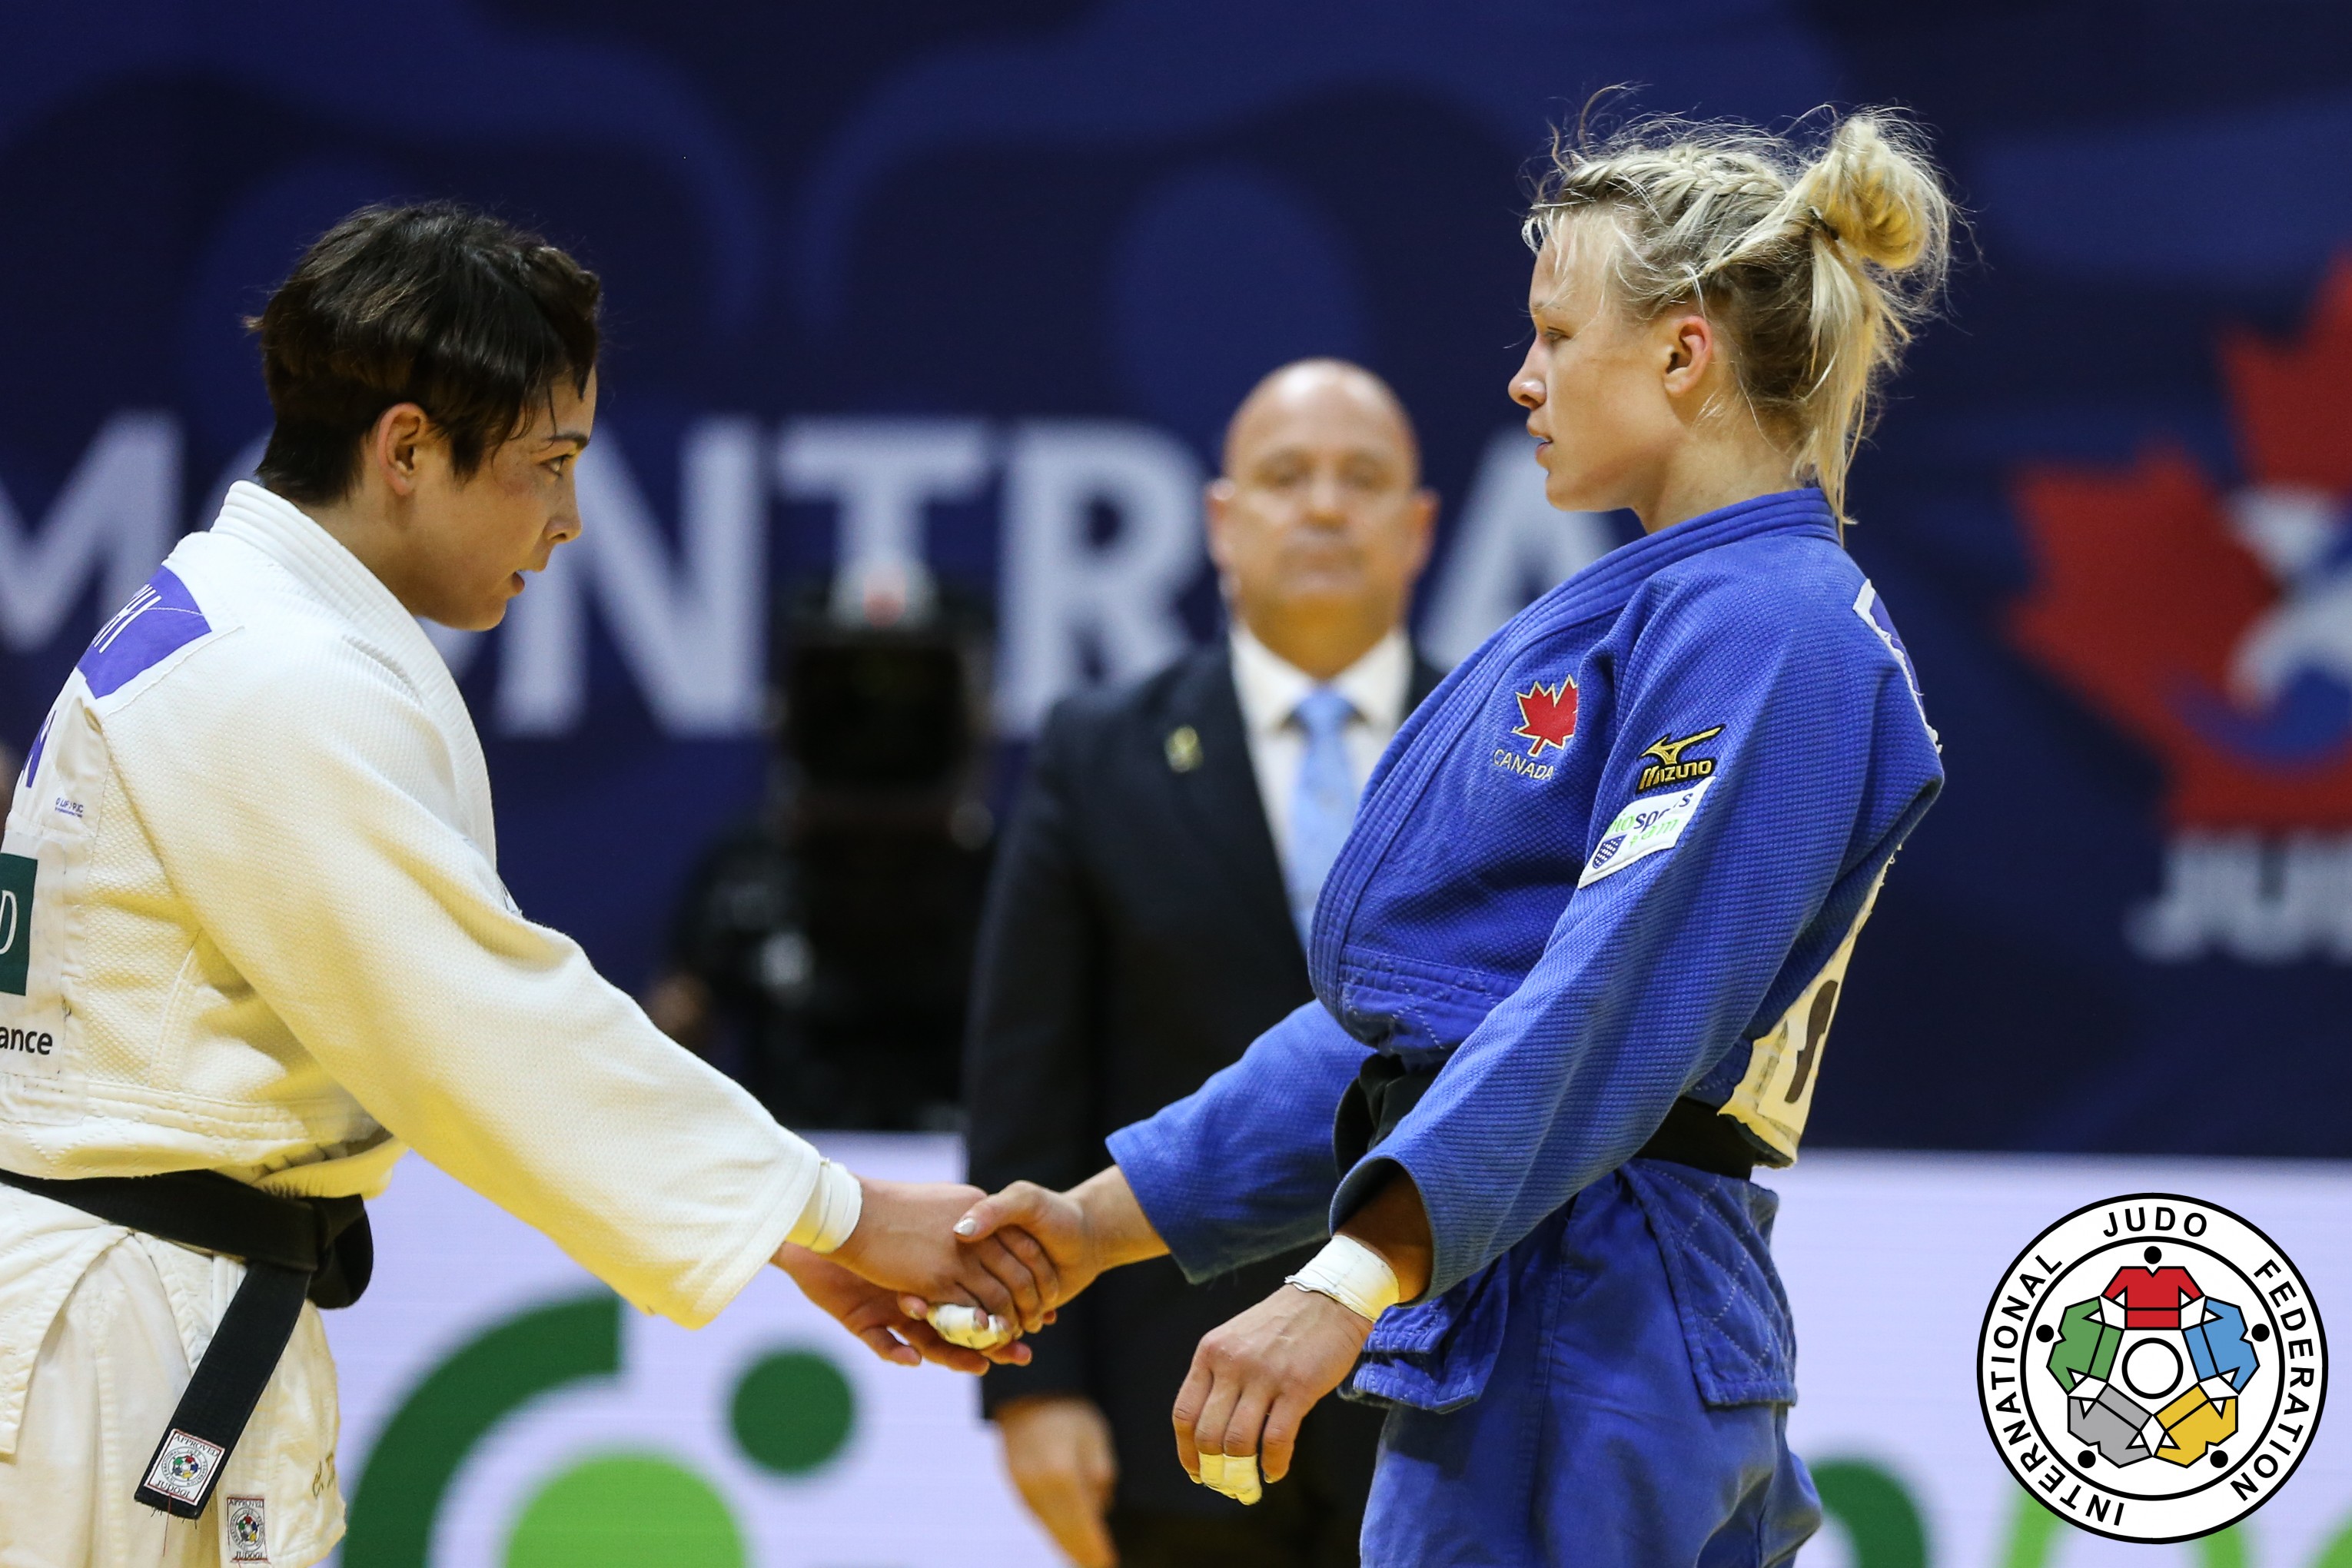 Two judoka shake hands